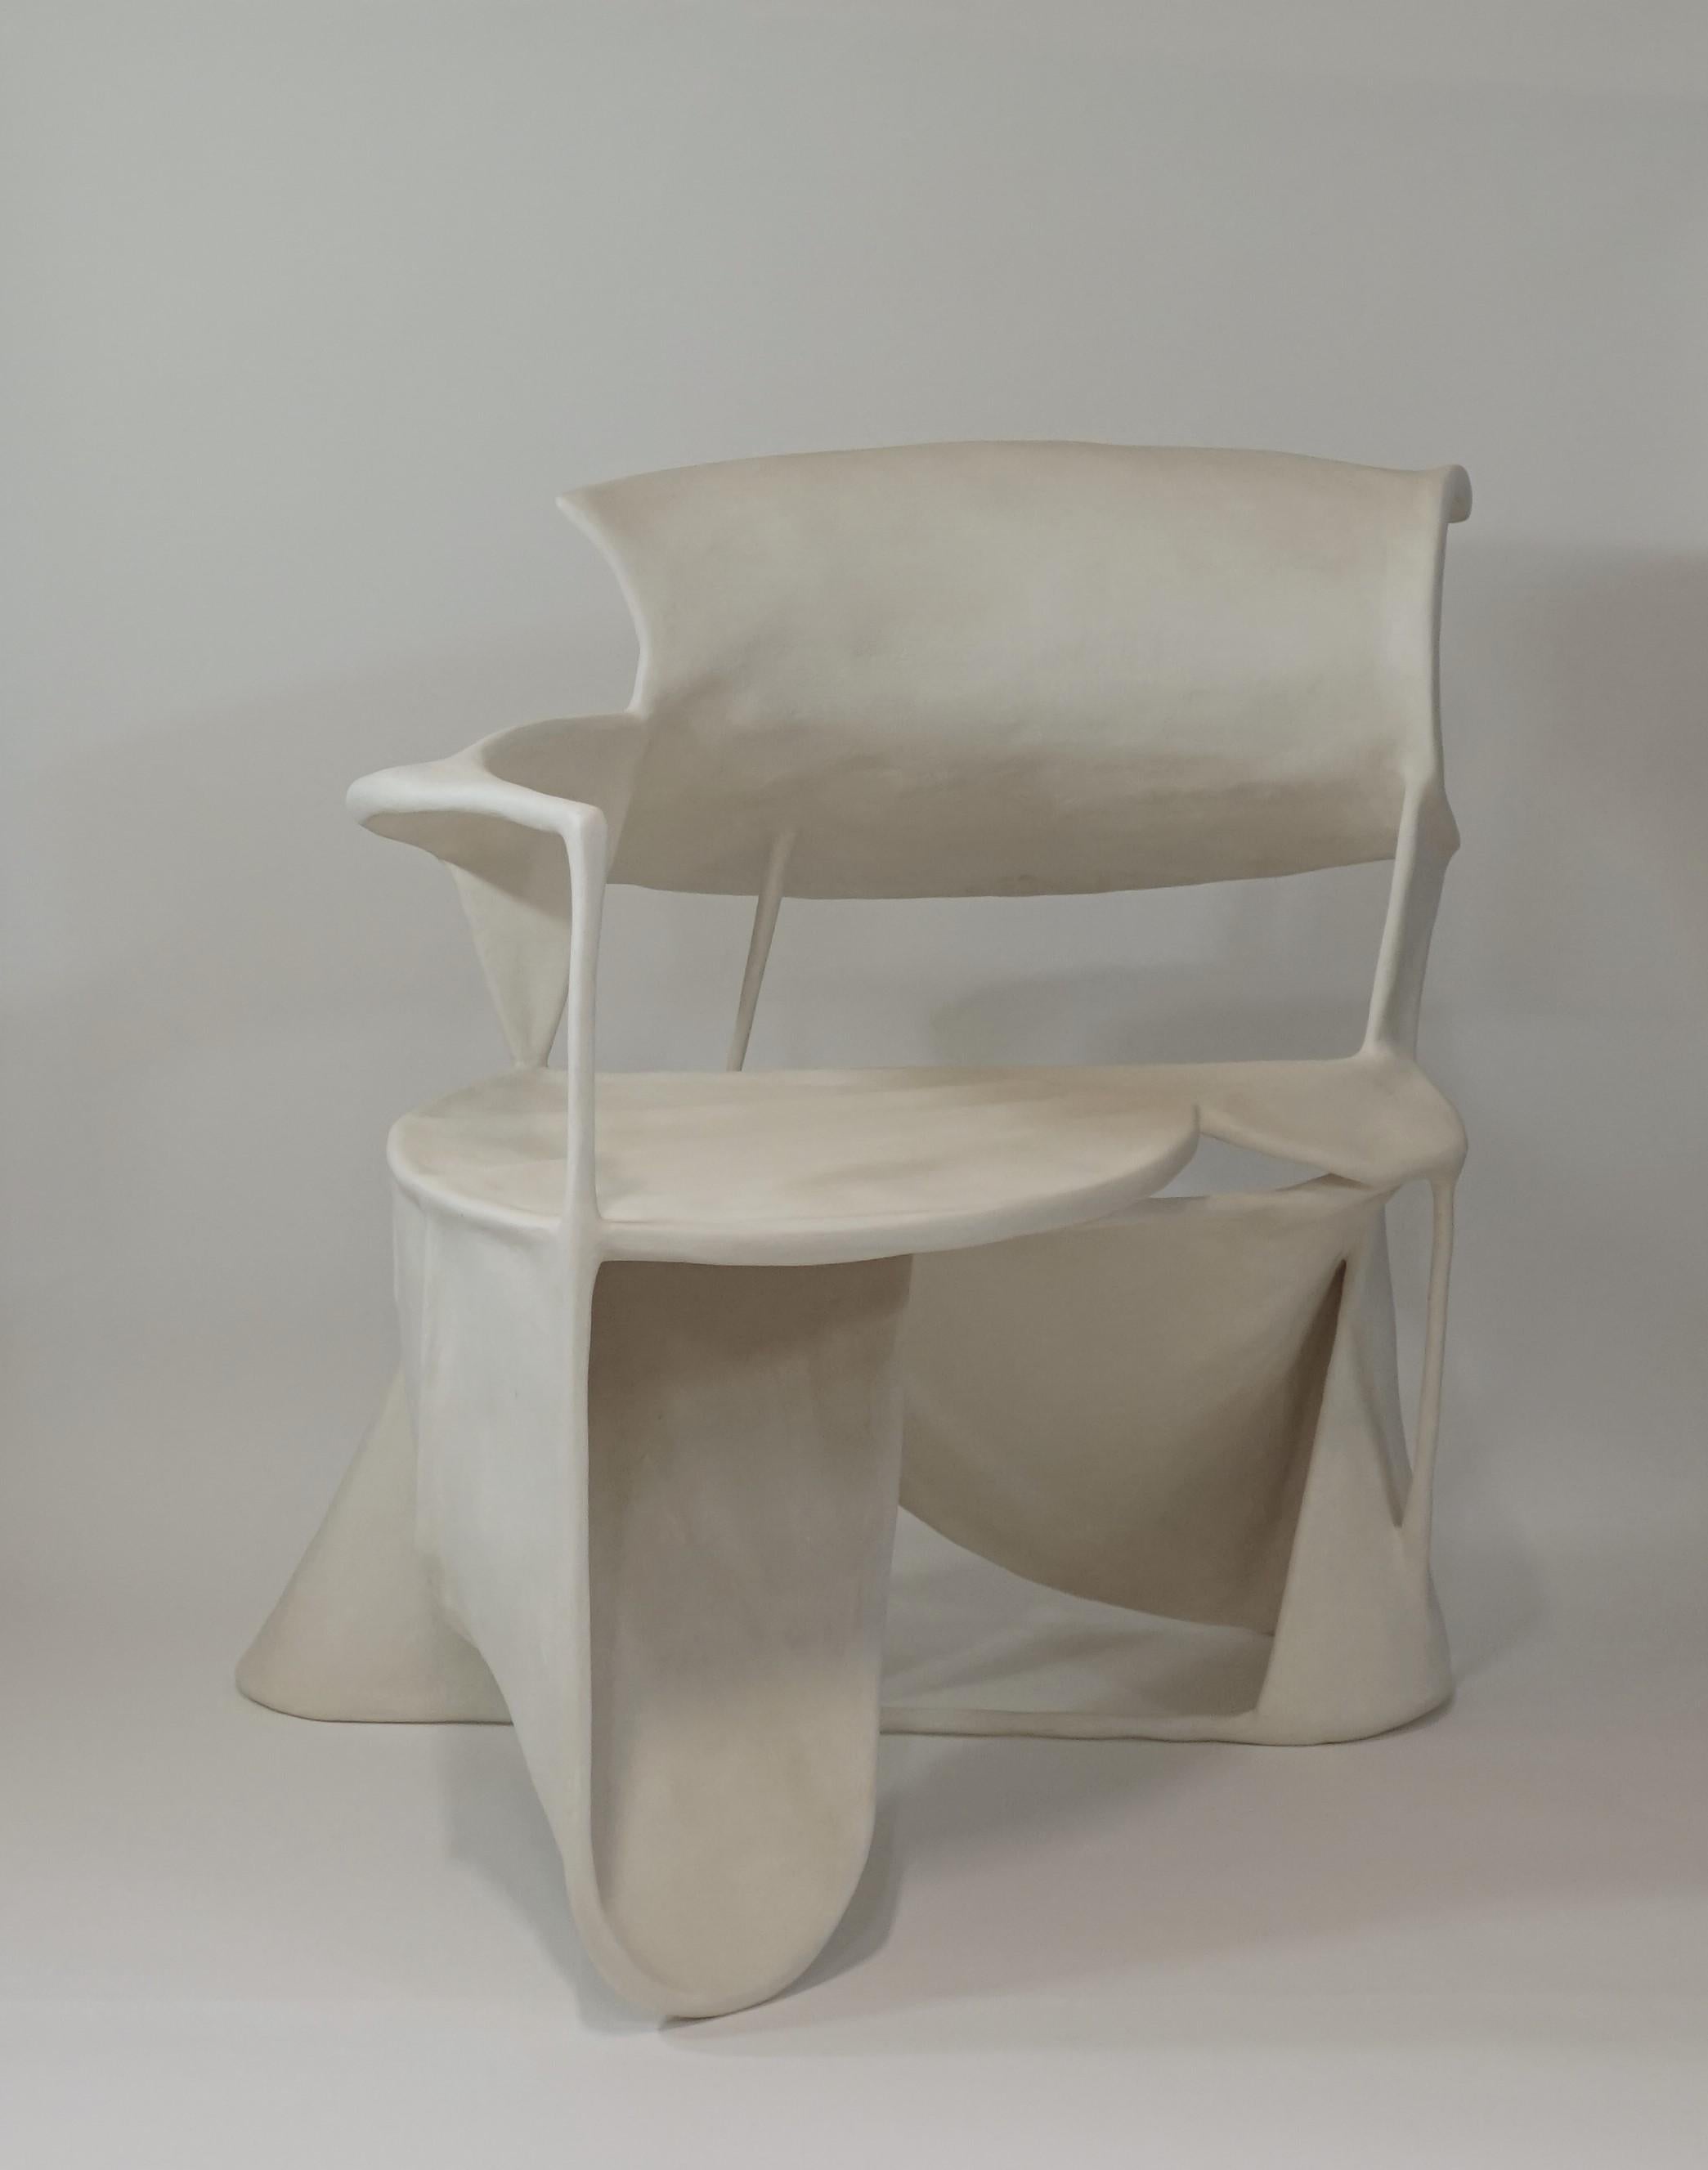 Cement Contemporary Design White Textured Curved Sculptures Chair by Jordan van der Ven For Sale